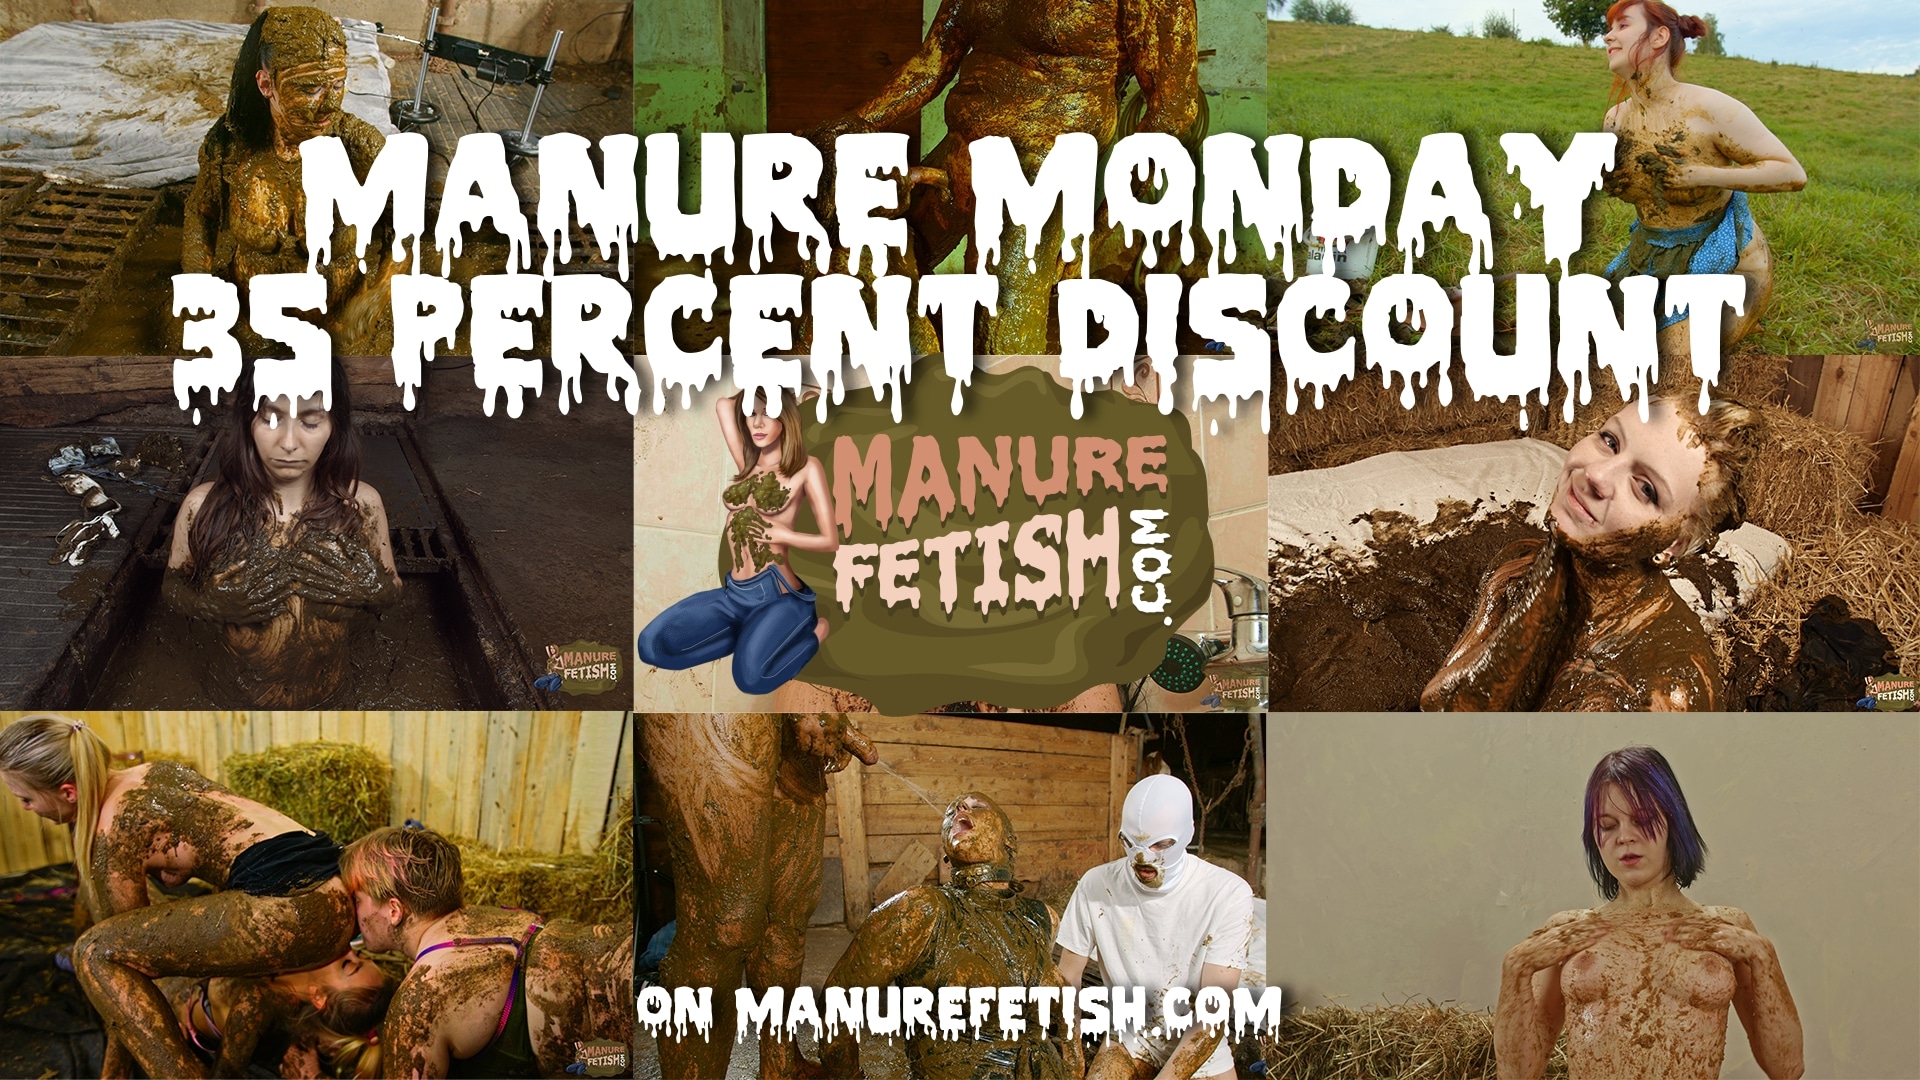 Manure Monday Sale